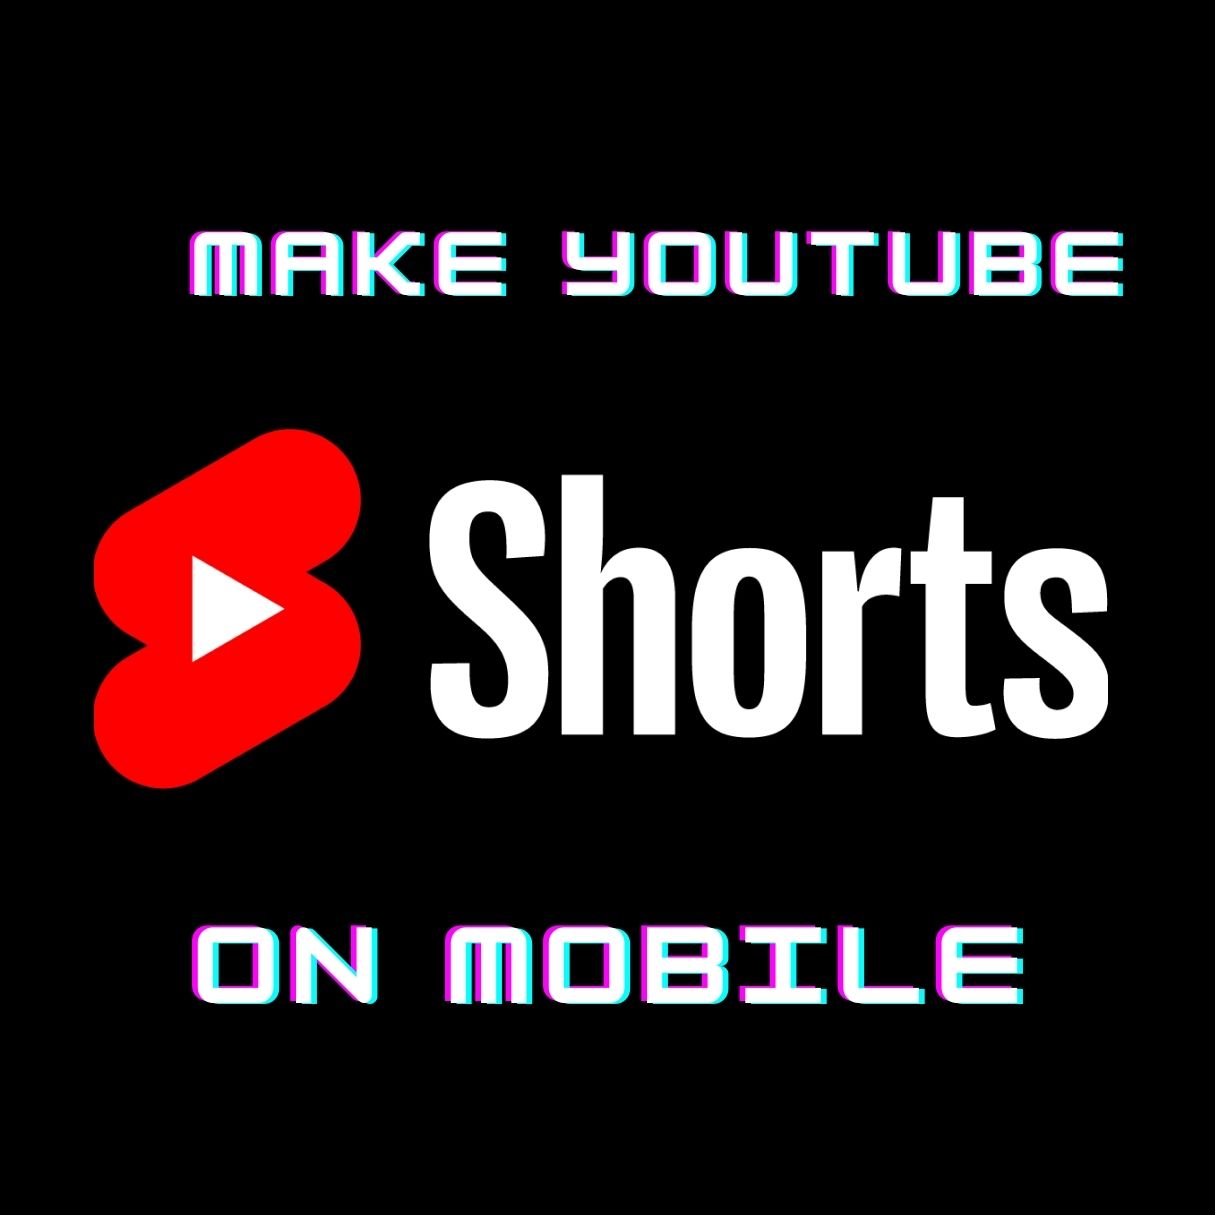 Make youtube shorts on mobile